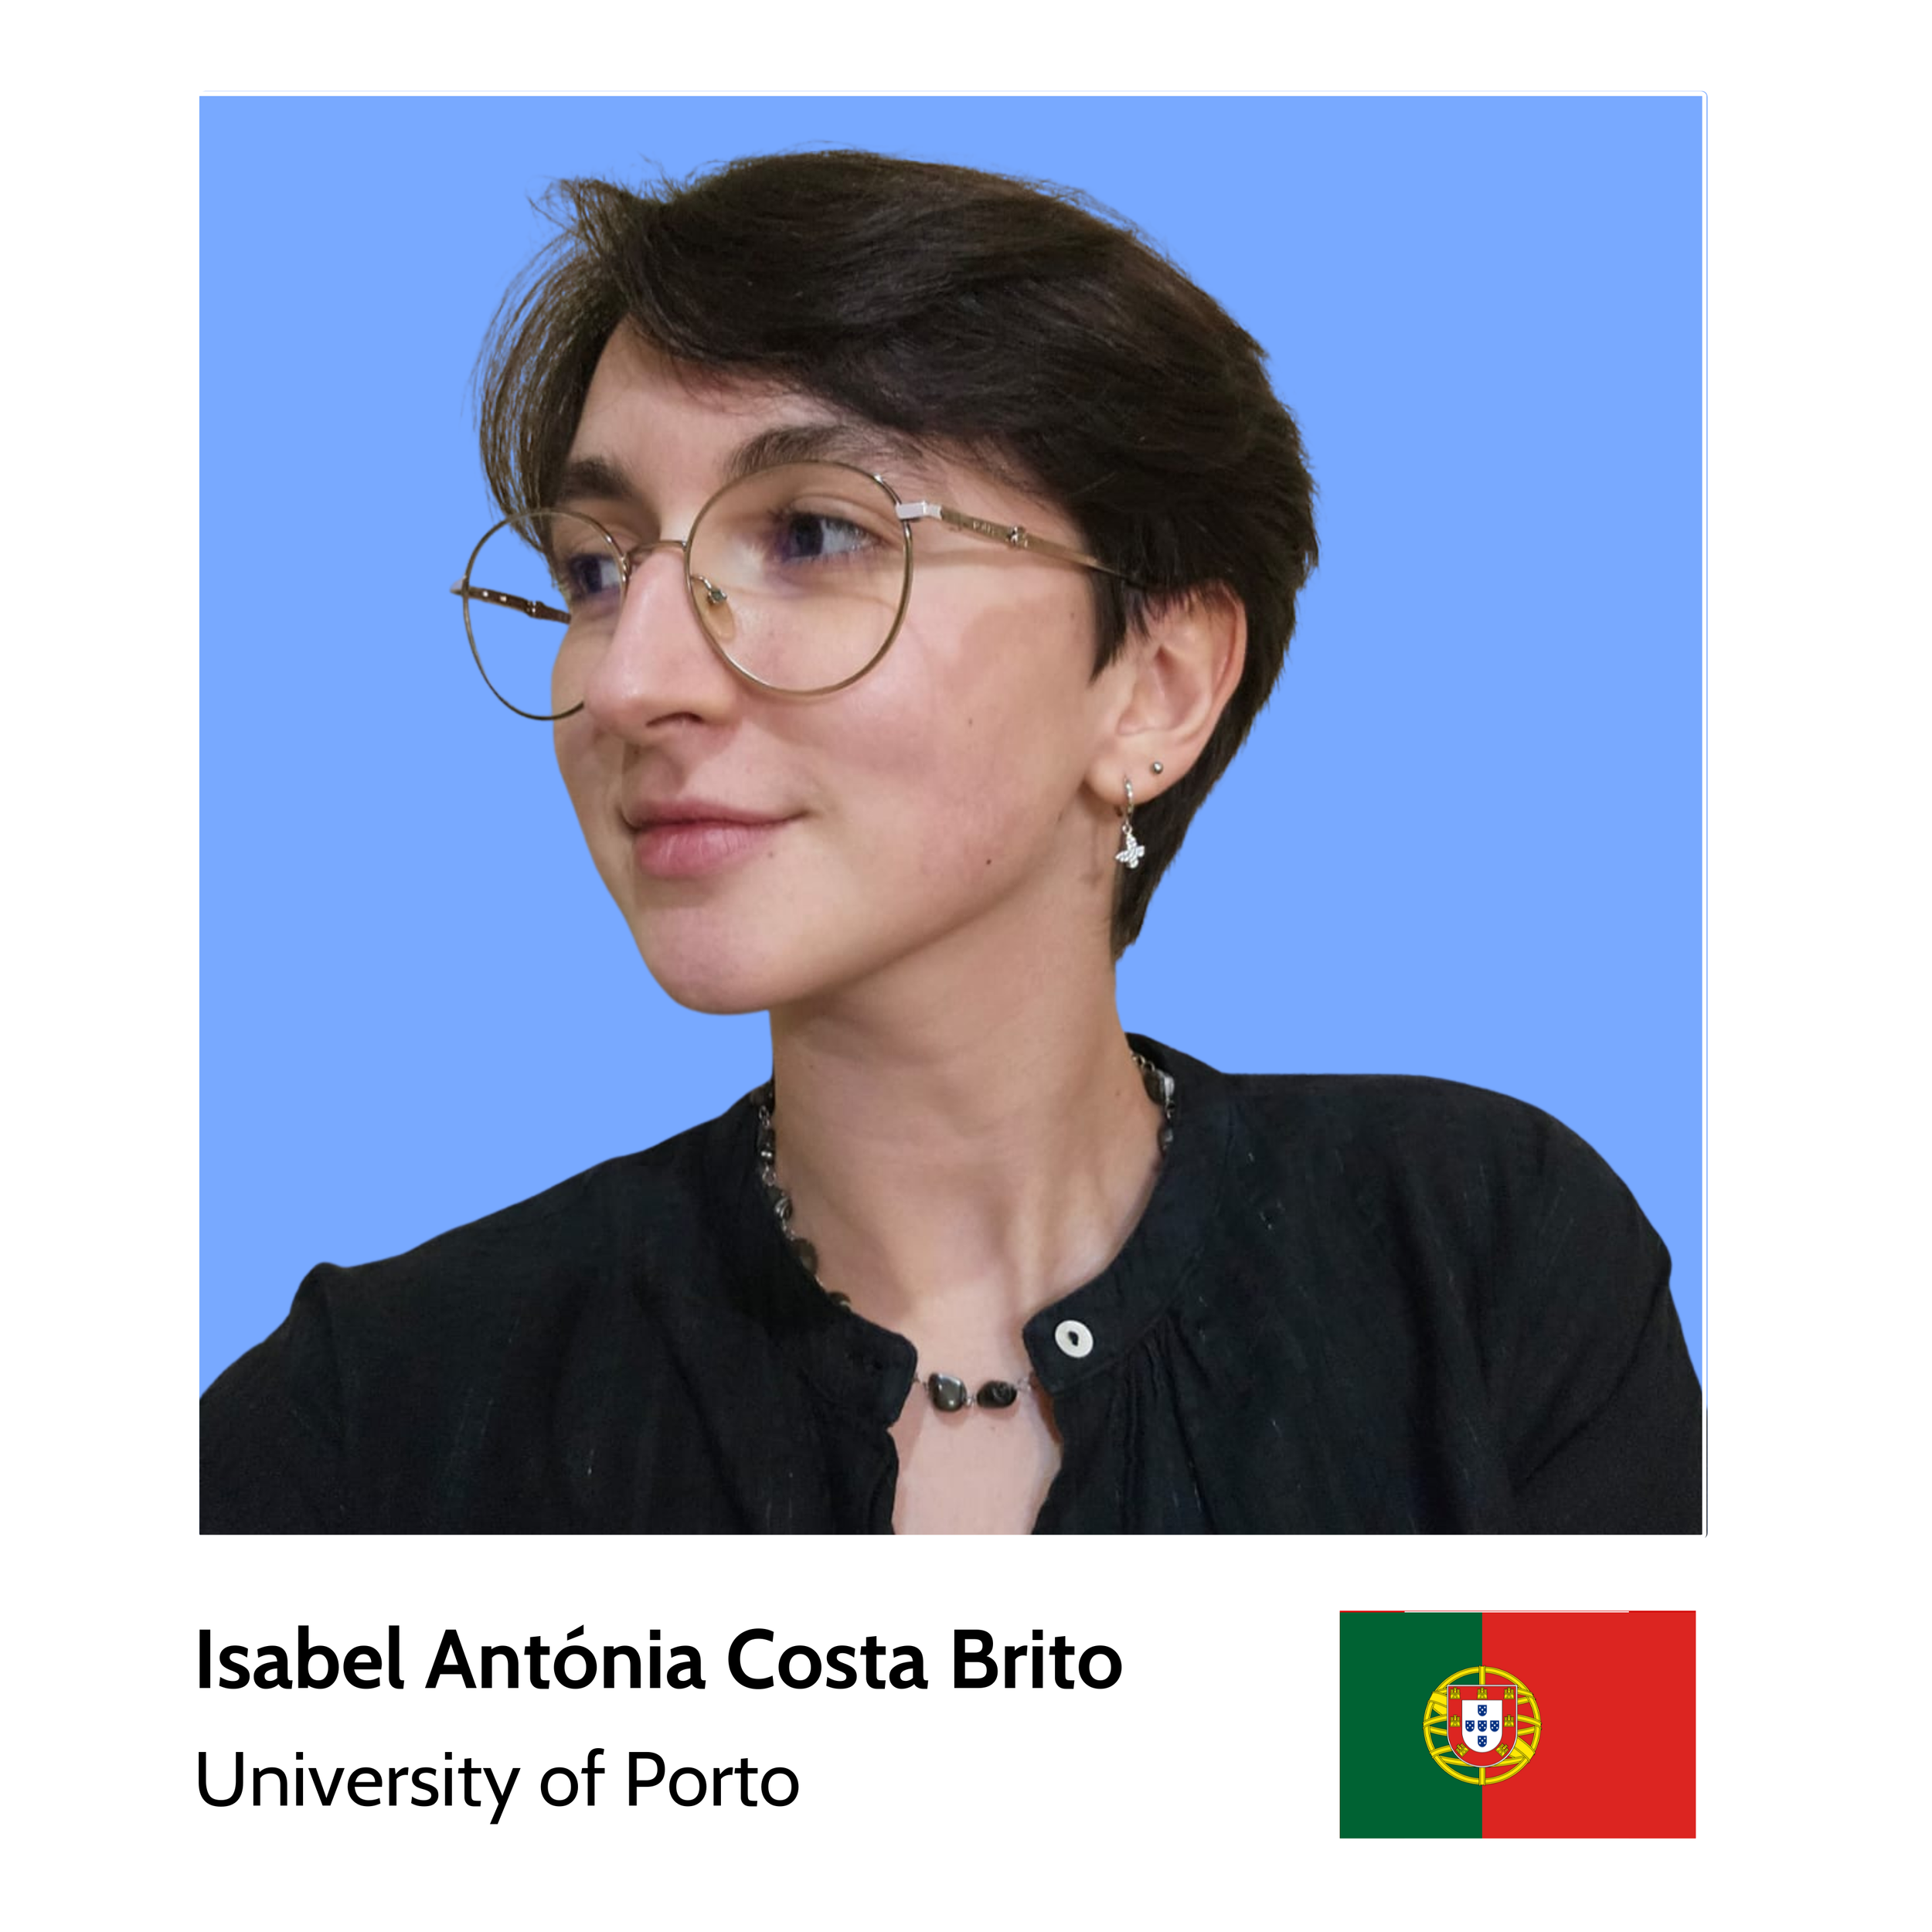 Your_Big_Year_ibm_z_student_ambassador_Isabel_Antónia_Costa_Brito_University_of_Porto.png